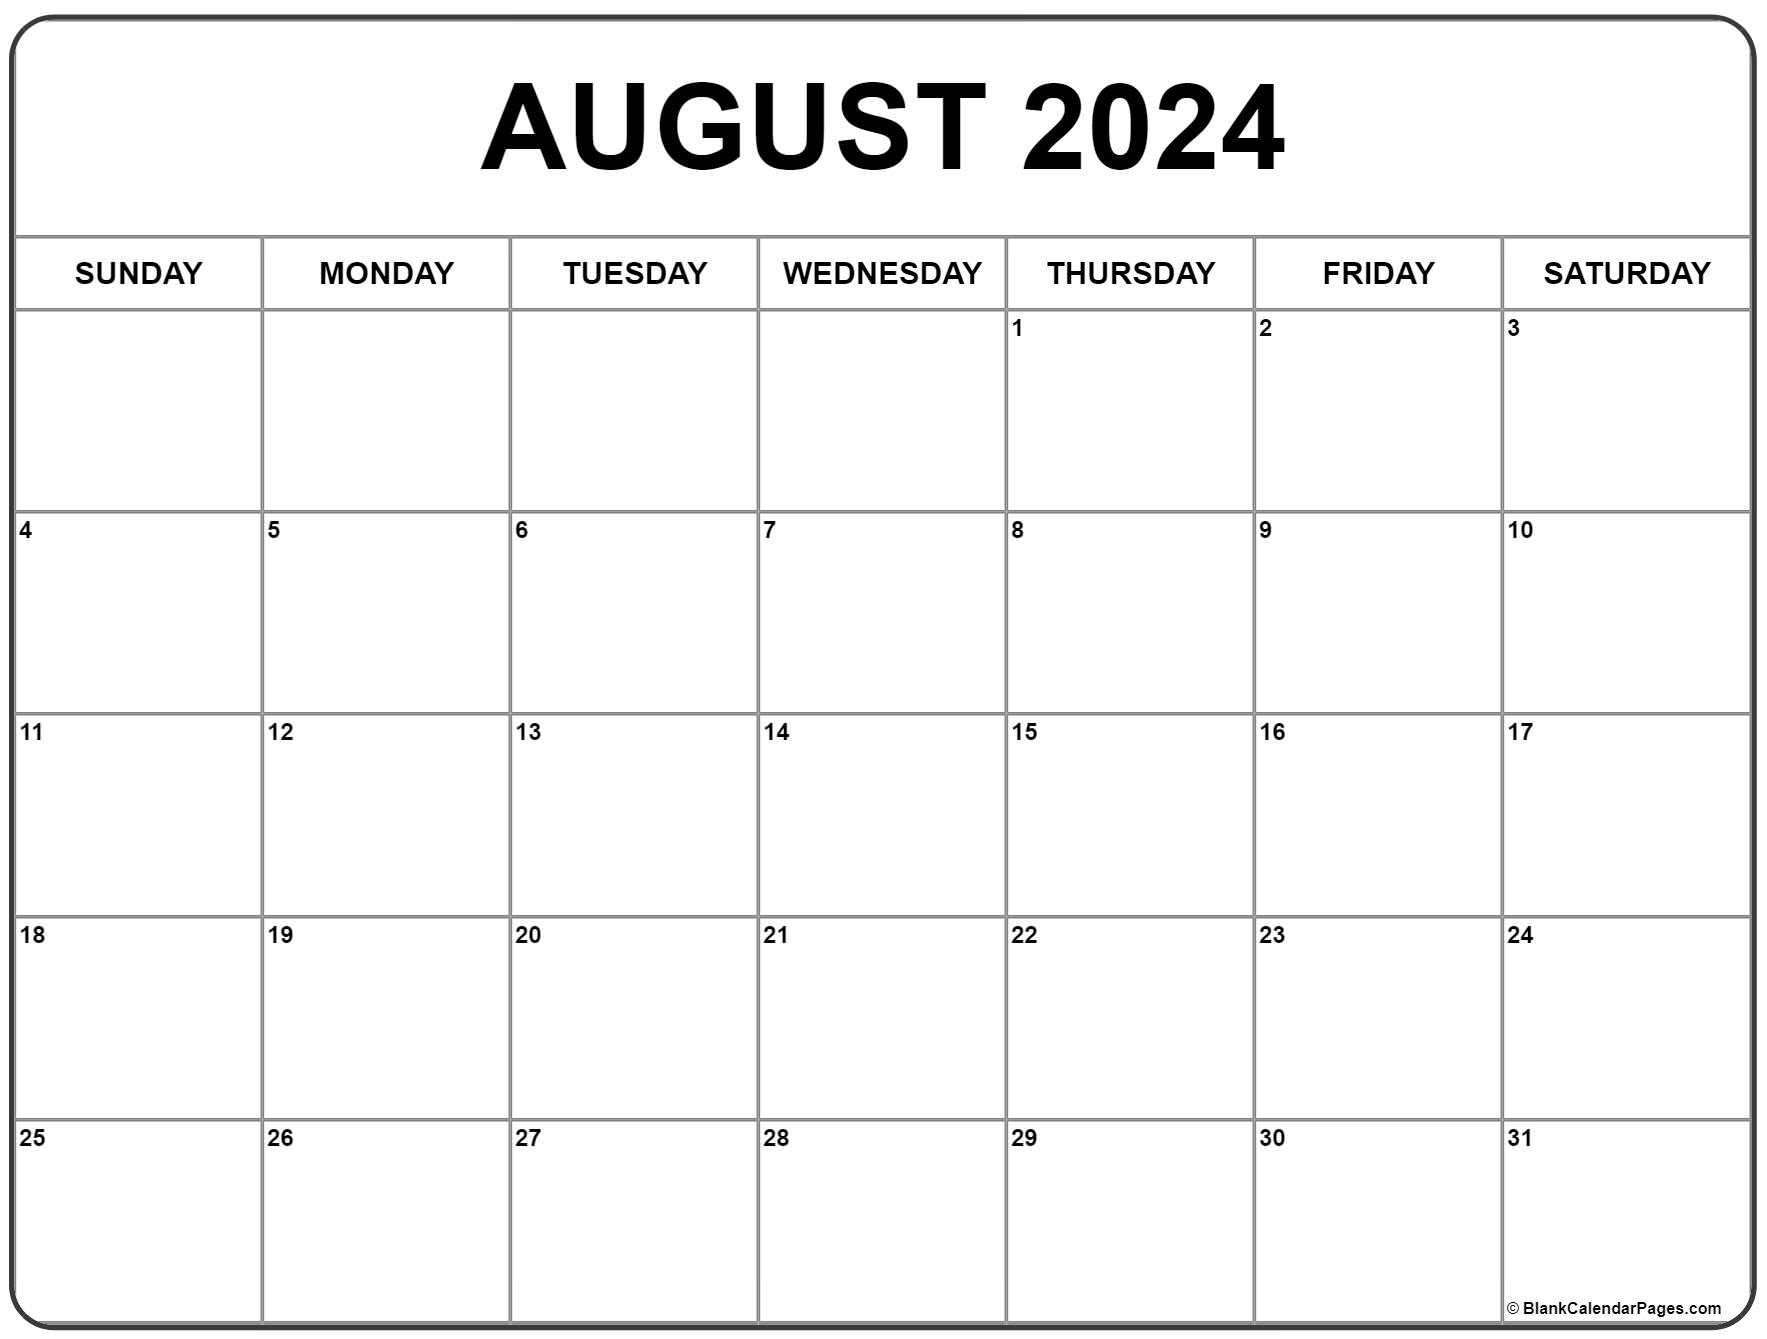 August 2024 Calendar | Free Printable Calendar for August Free Printable Calendar 2024